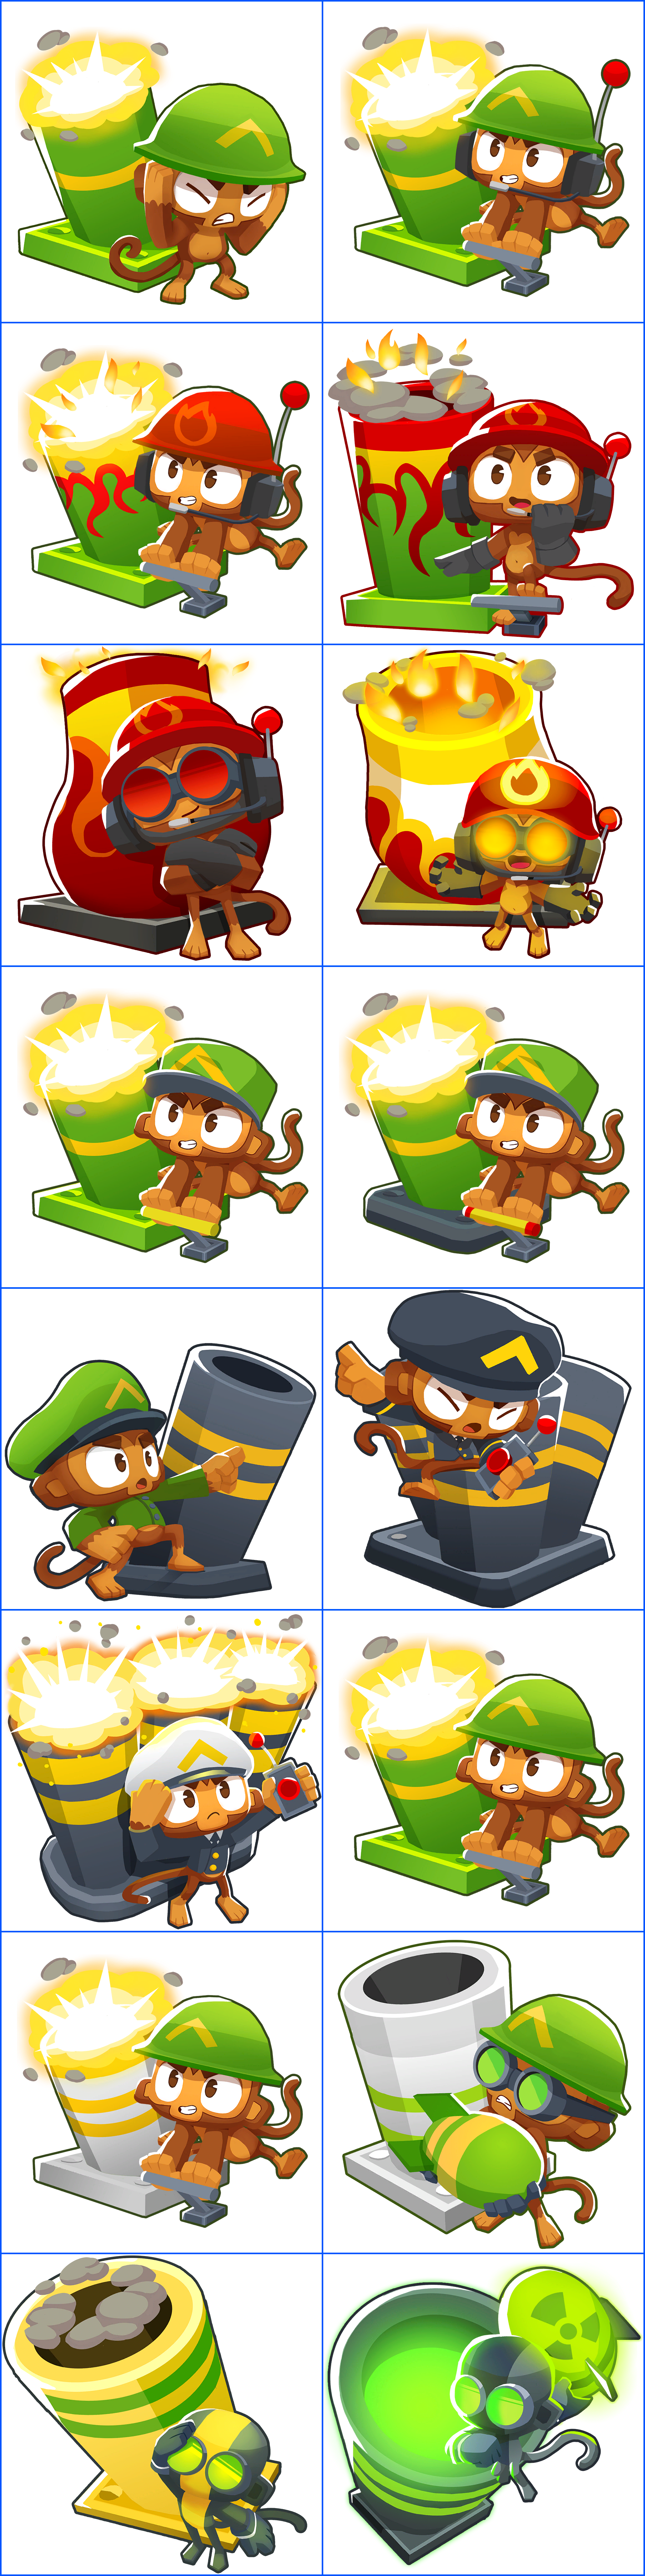 Bloons Tower Defense 6 - Mortar Monkey